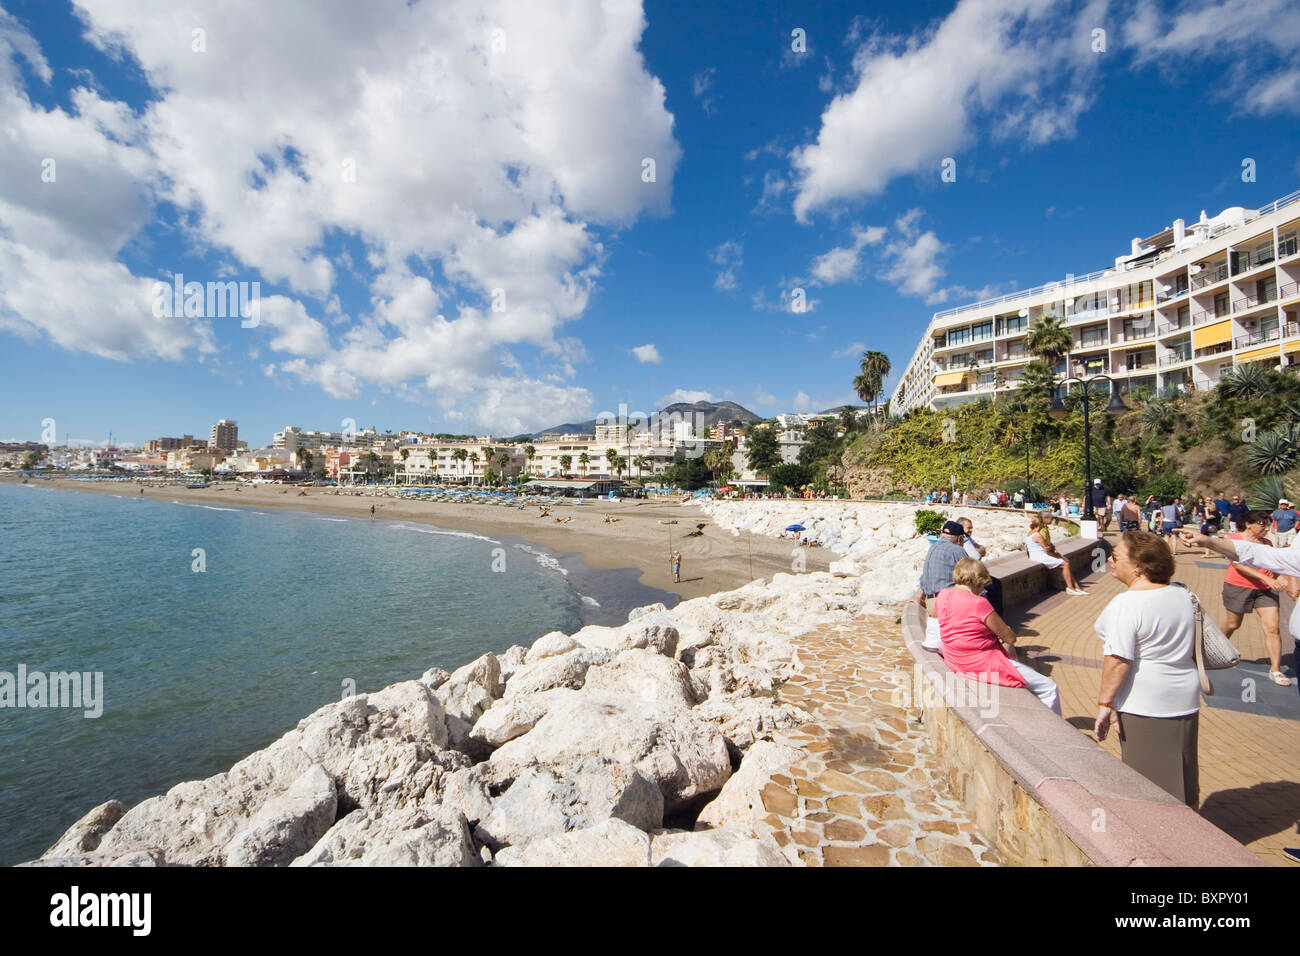 Vue de la plage de la Carihuela et la promenade. Torremolinos, Malaga, Costa del Sol, Espagne. Banque D'Images